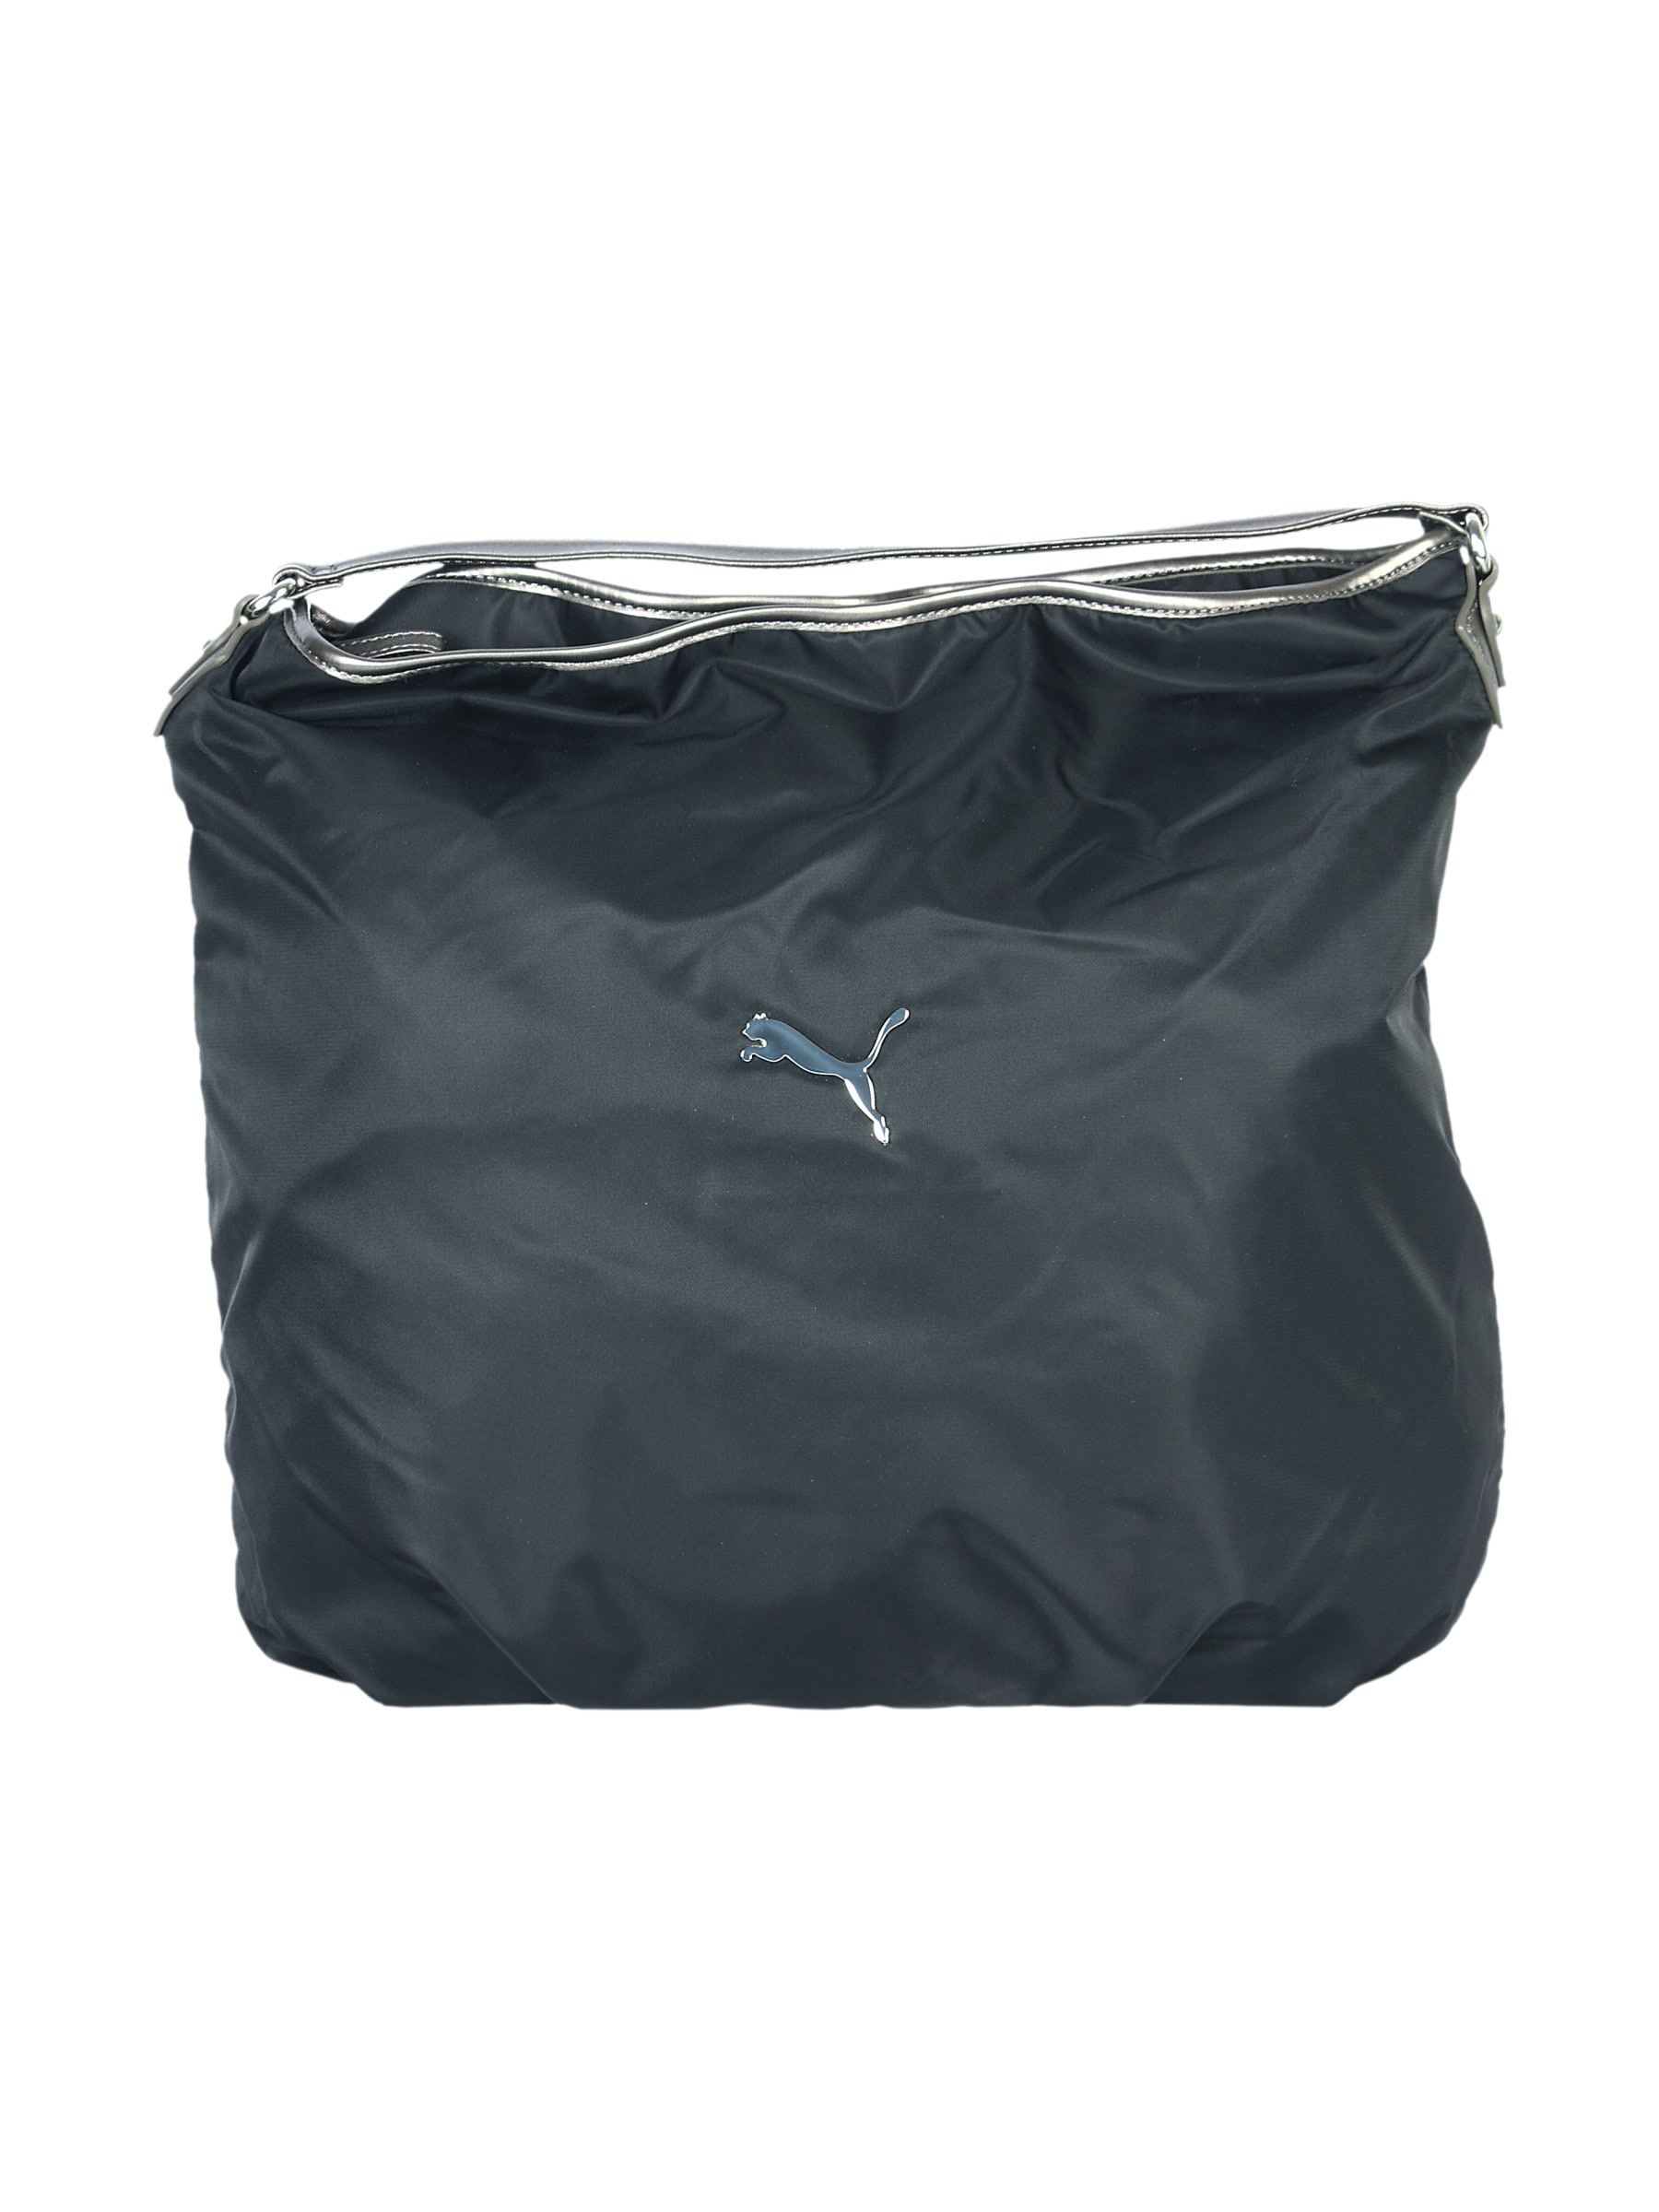 Puma Unisex Dazzle Shopper Black Bags